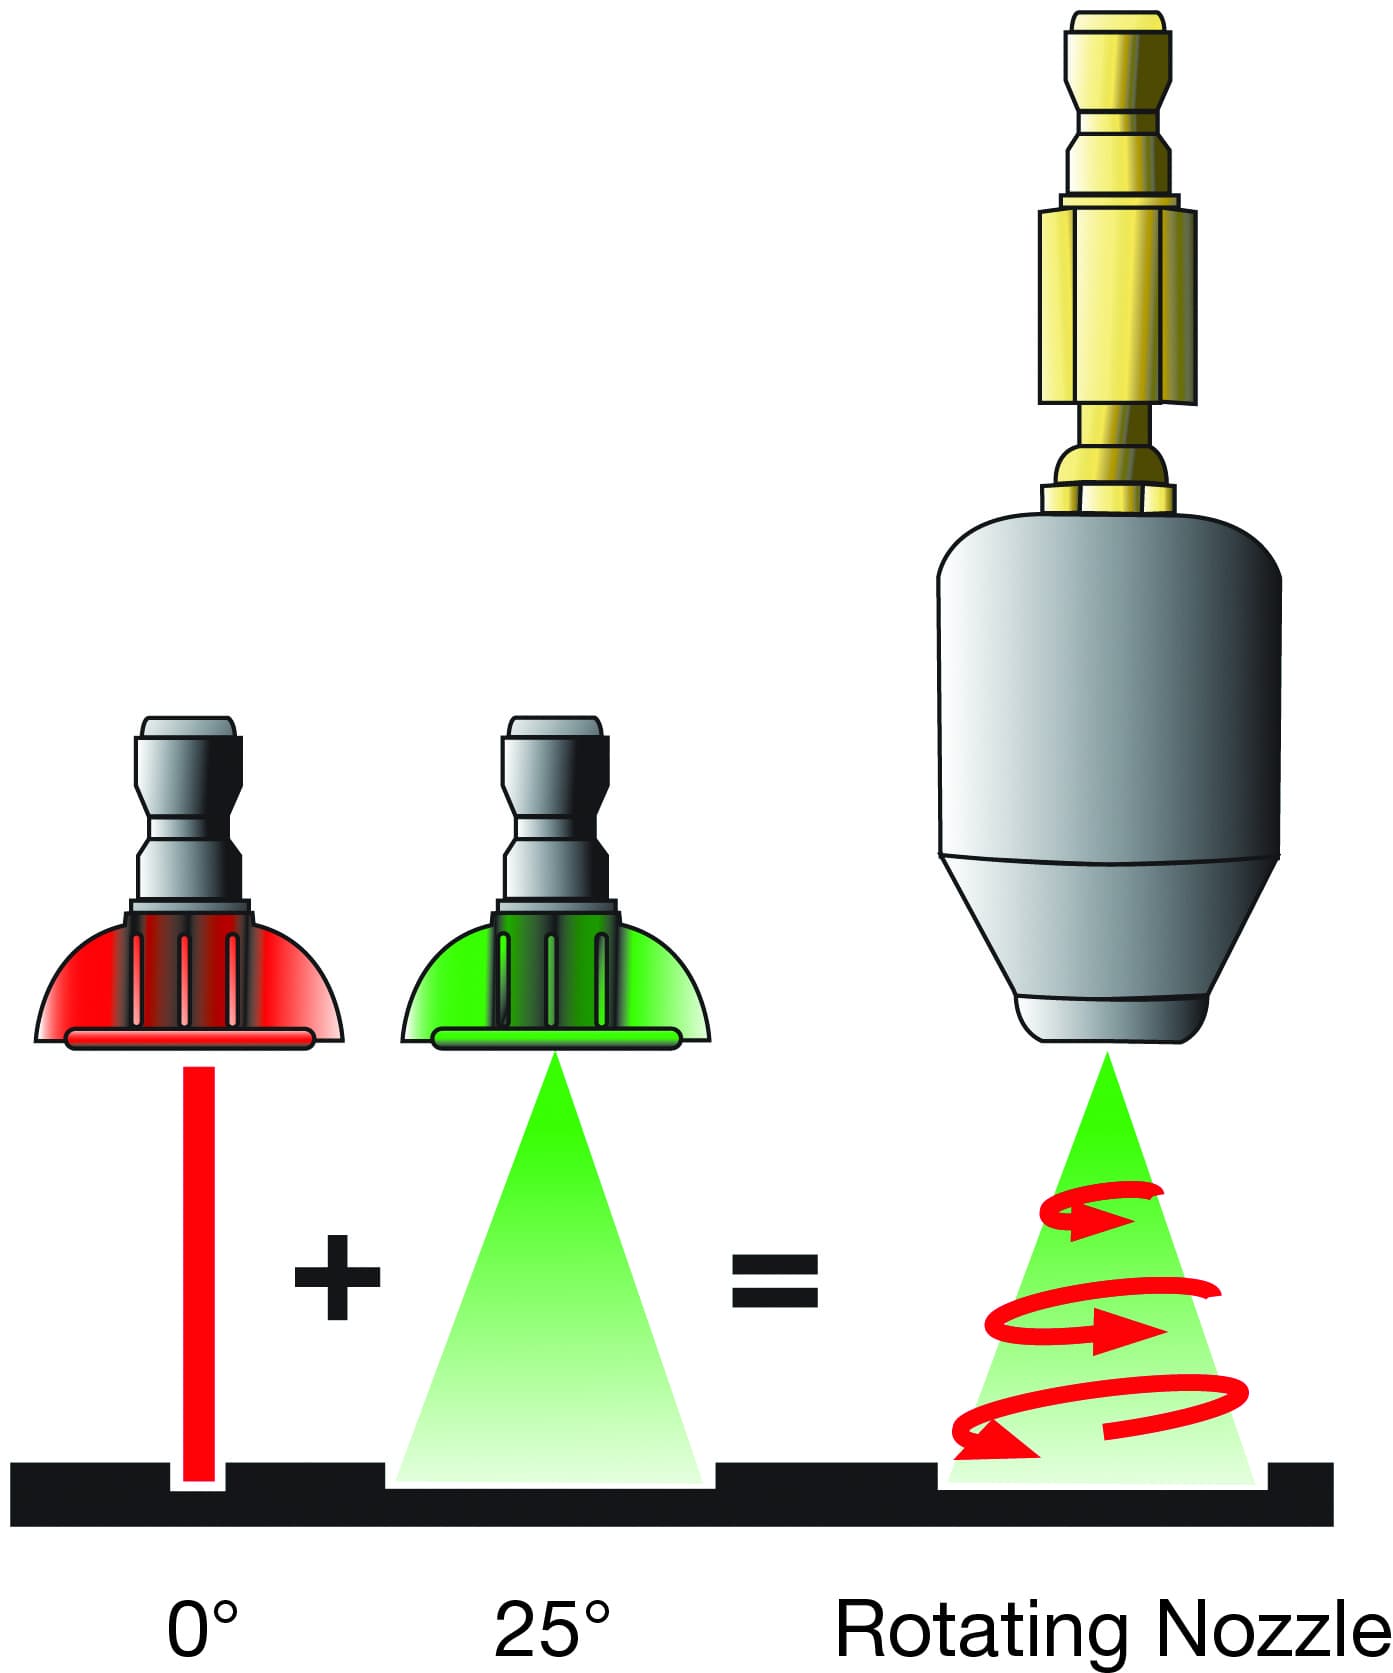 nozzle comparisons to rotating nozzle